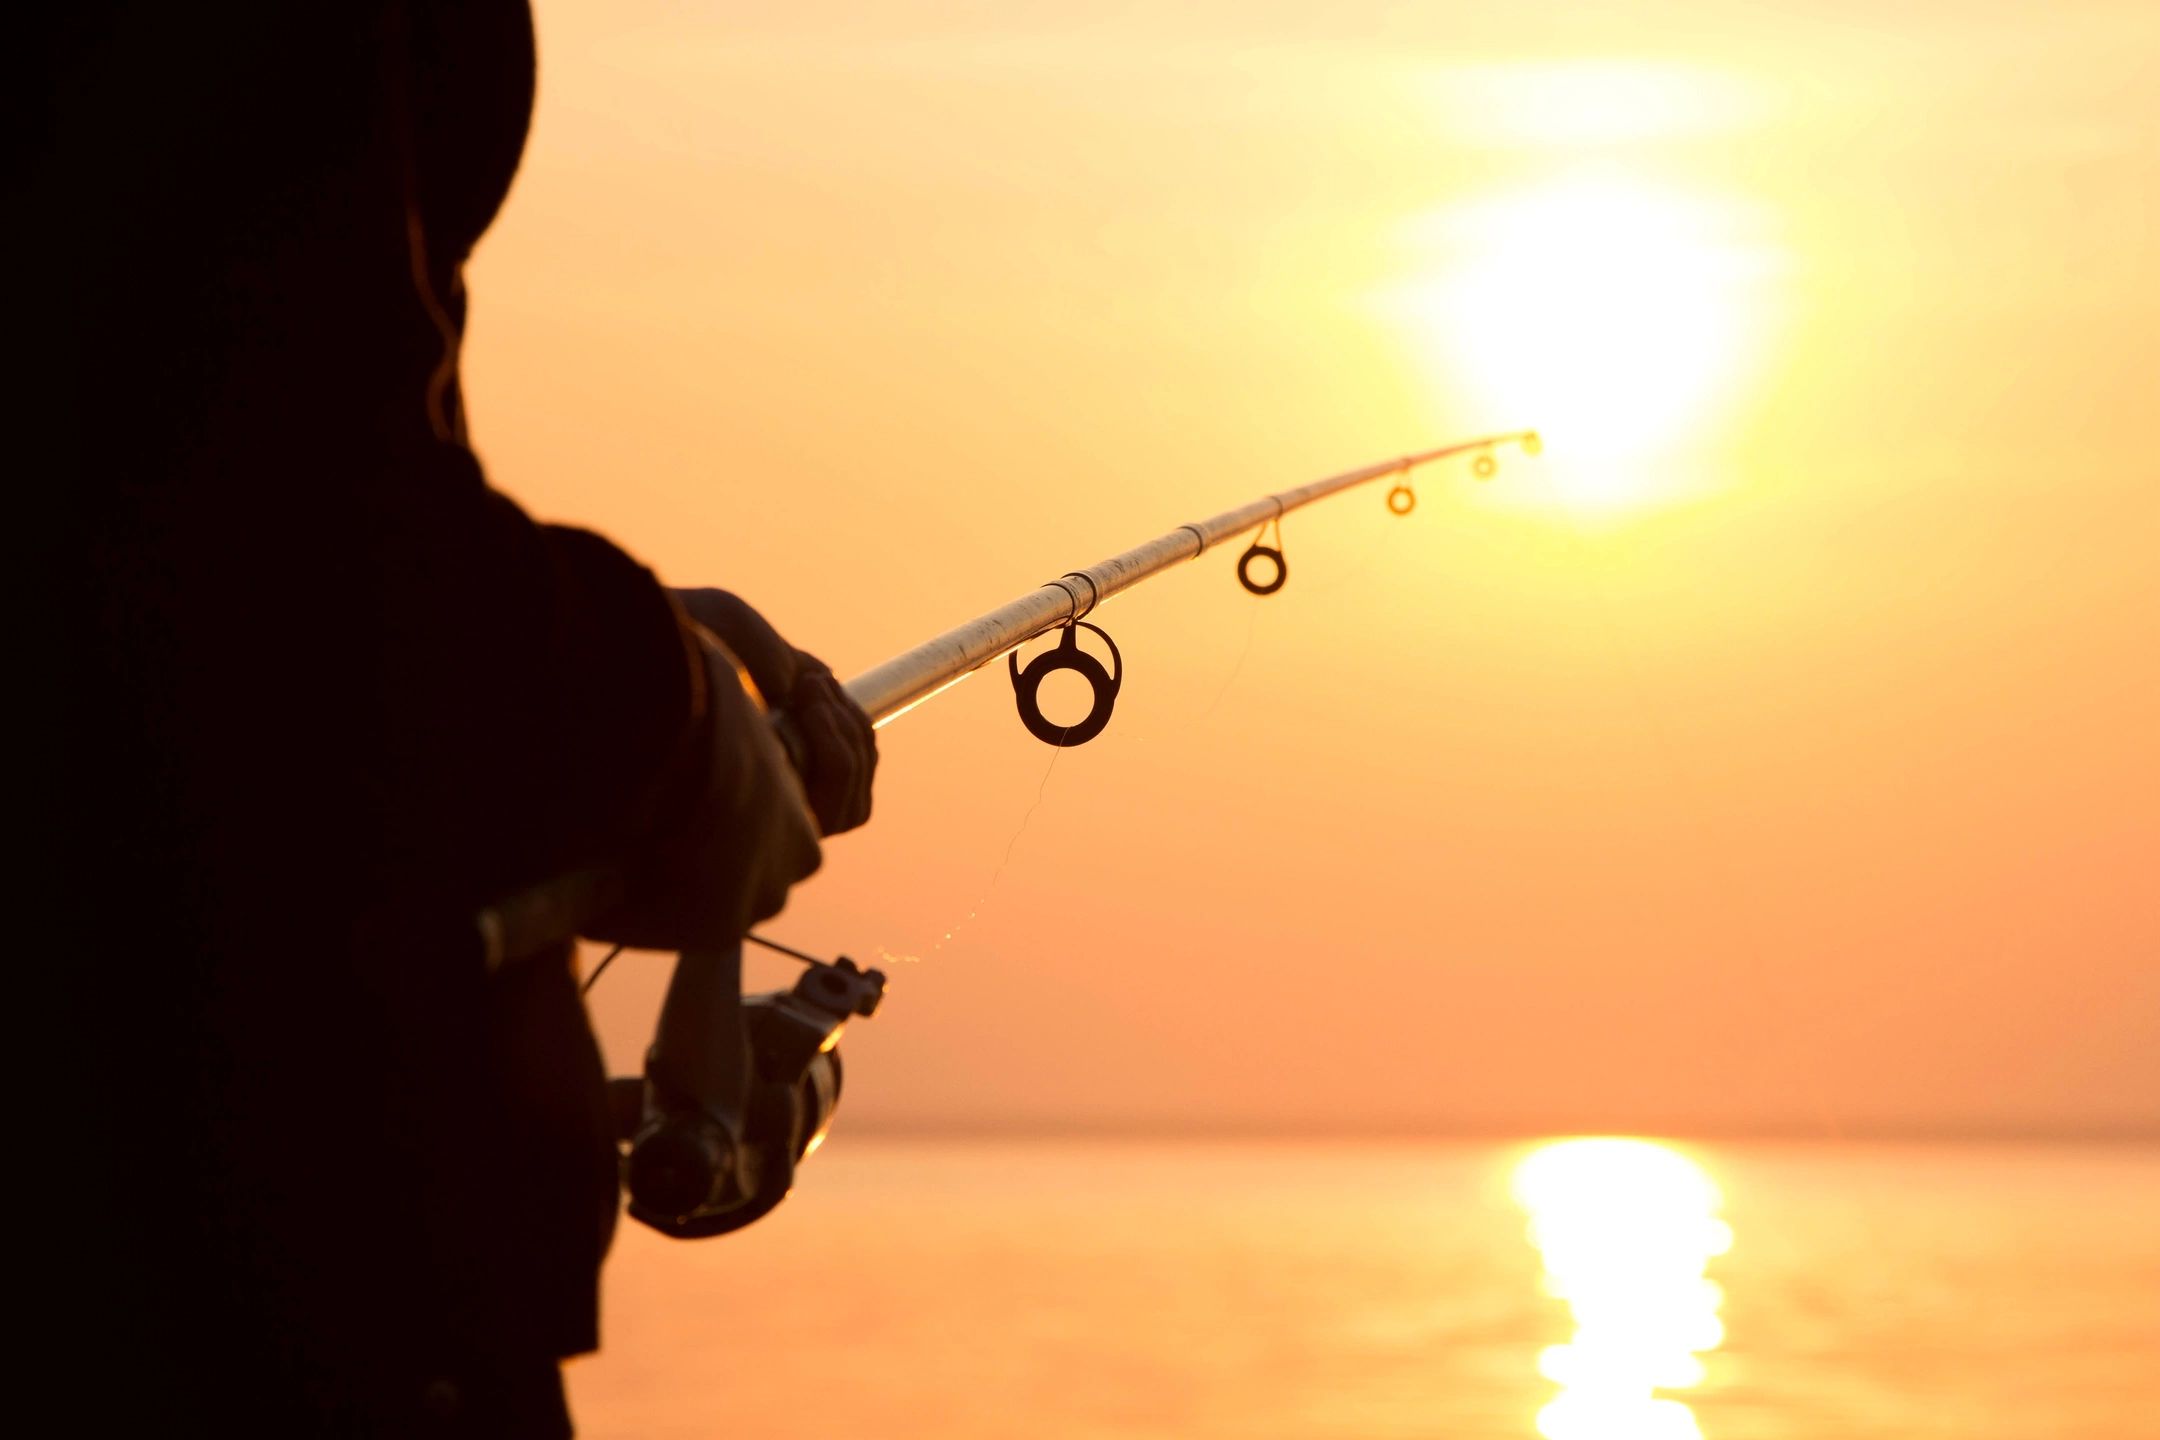 Hunting Hobby Fishing Spinning Rod, Reel,shrimp gooster Free